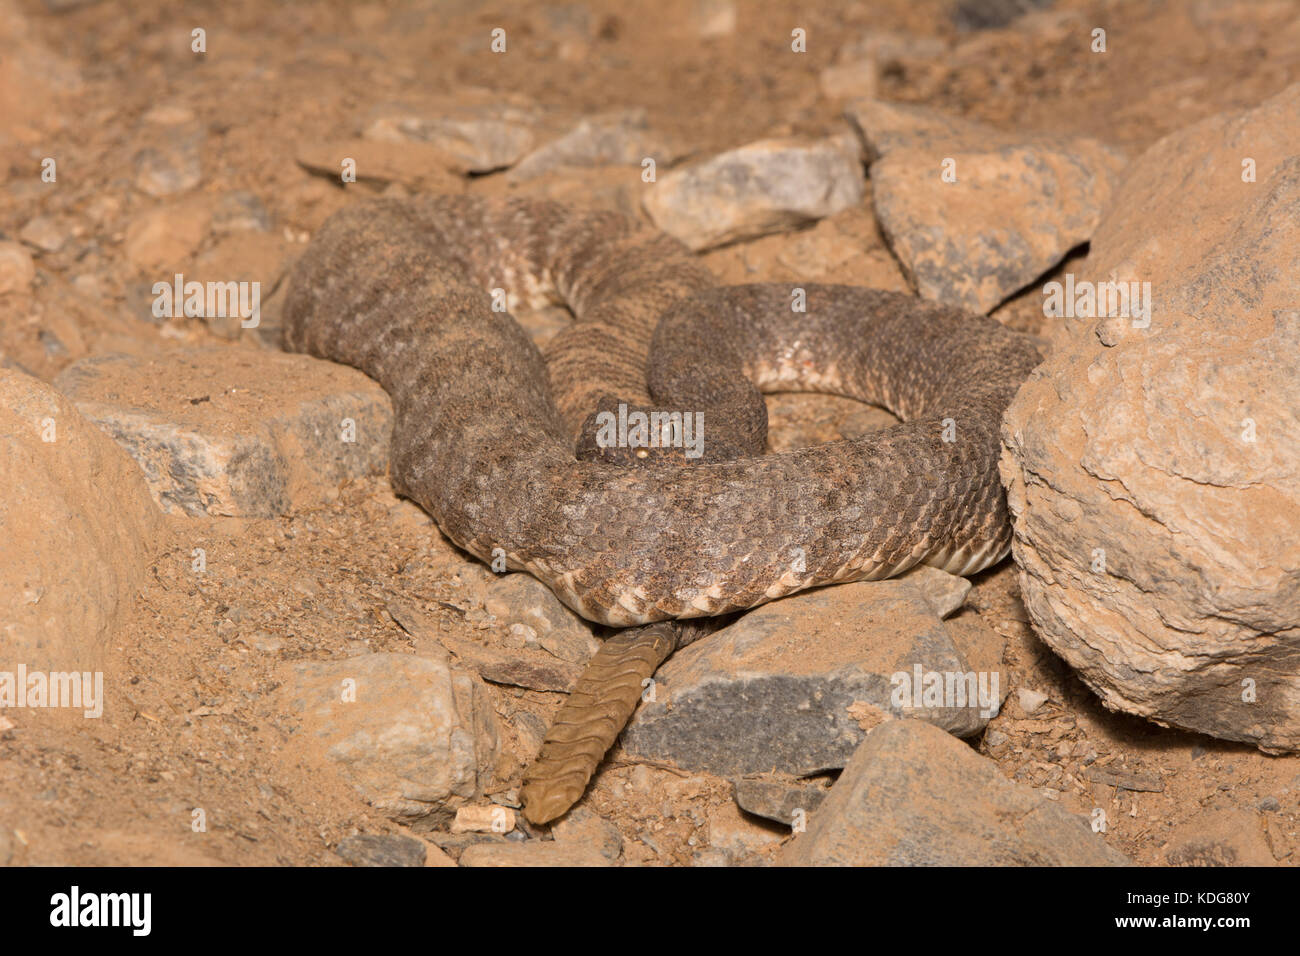 Southwestern Speckled Rattlesnake (Crotalus pyrrhus) from Maricopa County, Arizona, USA. Stock Photo